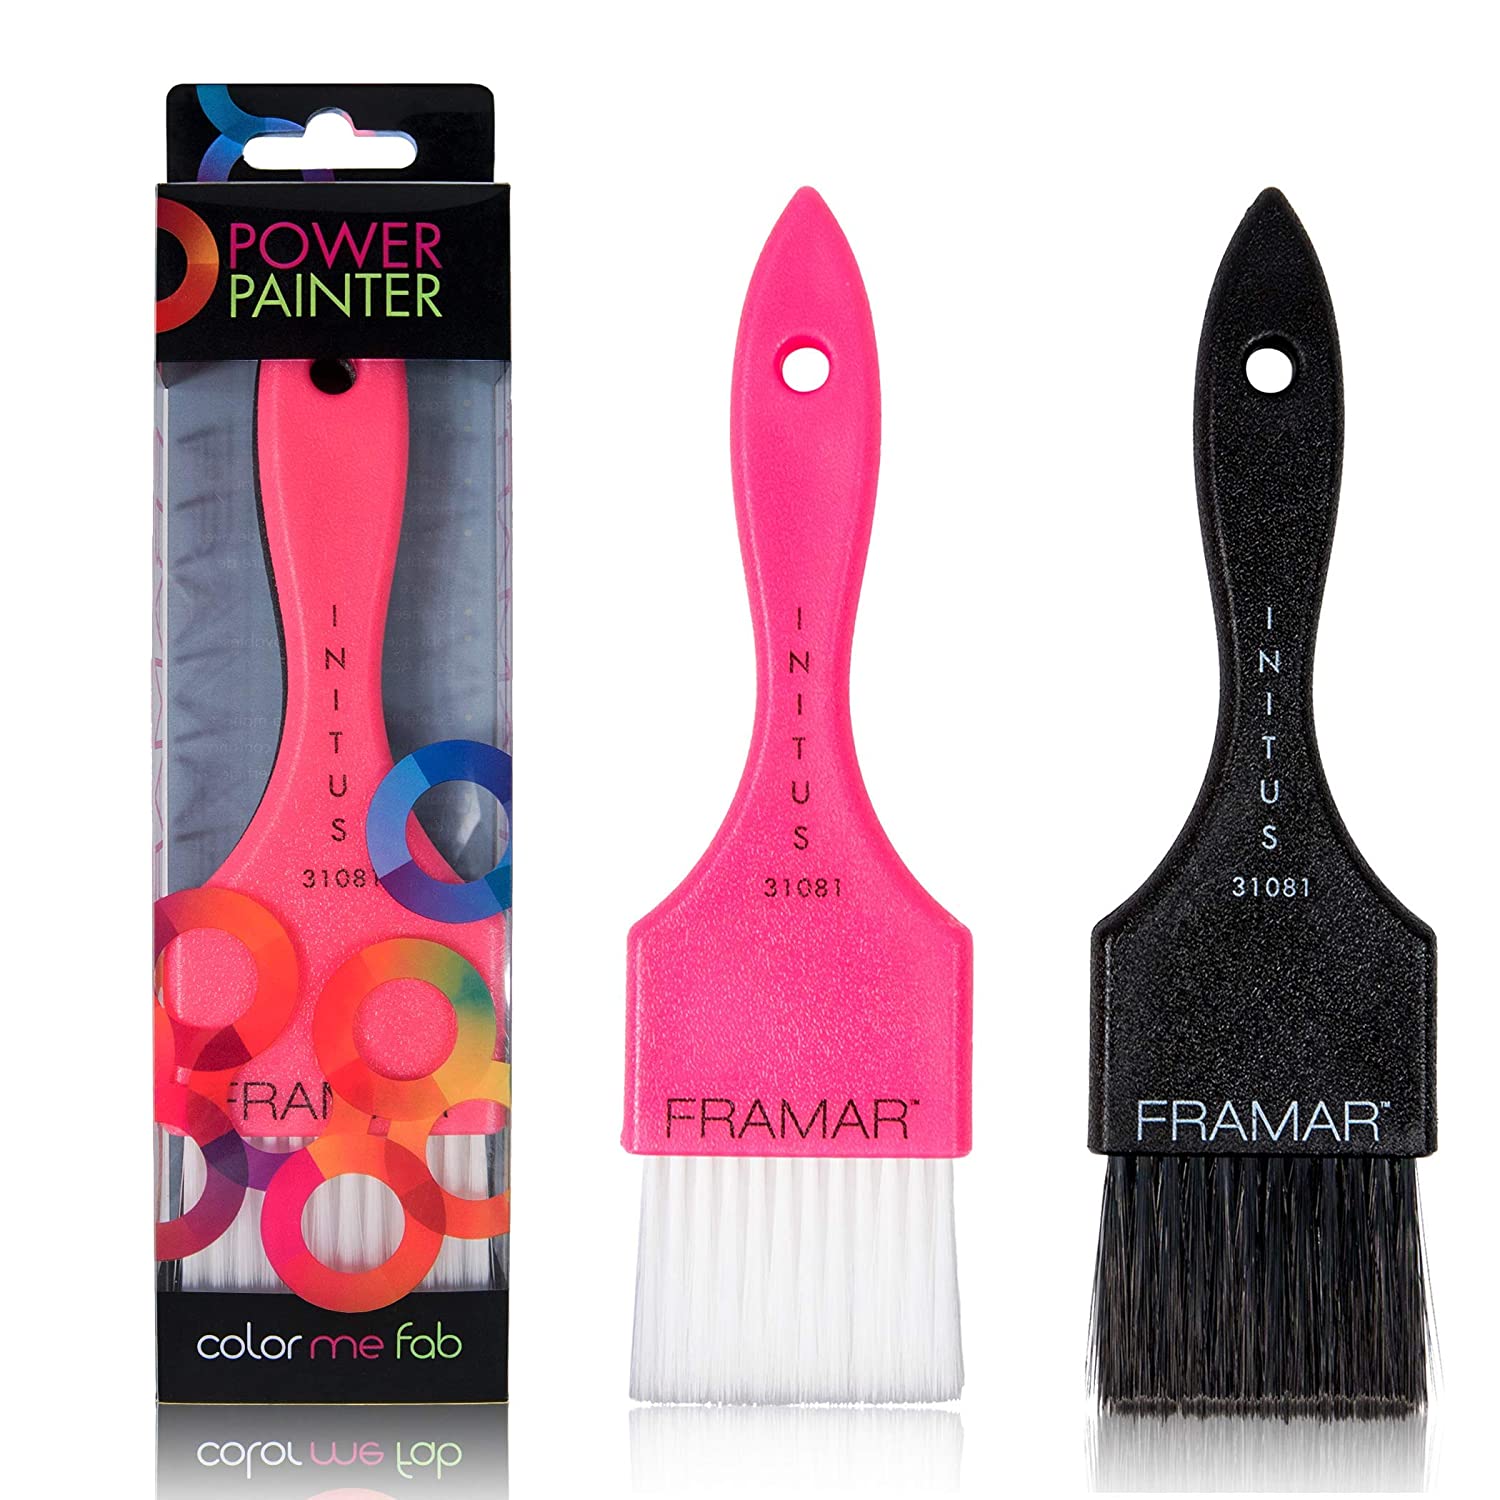 Framar Power Painter Hair Color Brush Hair Dye Brush - 2 Pack